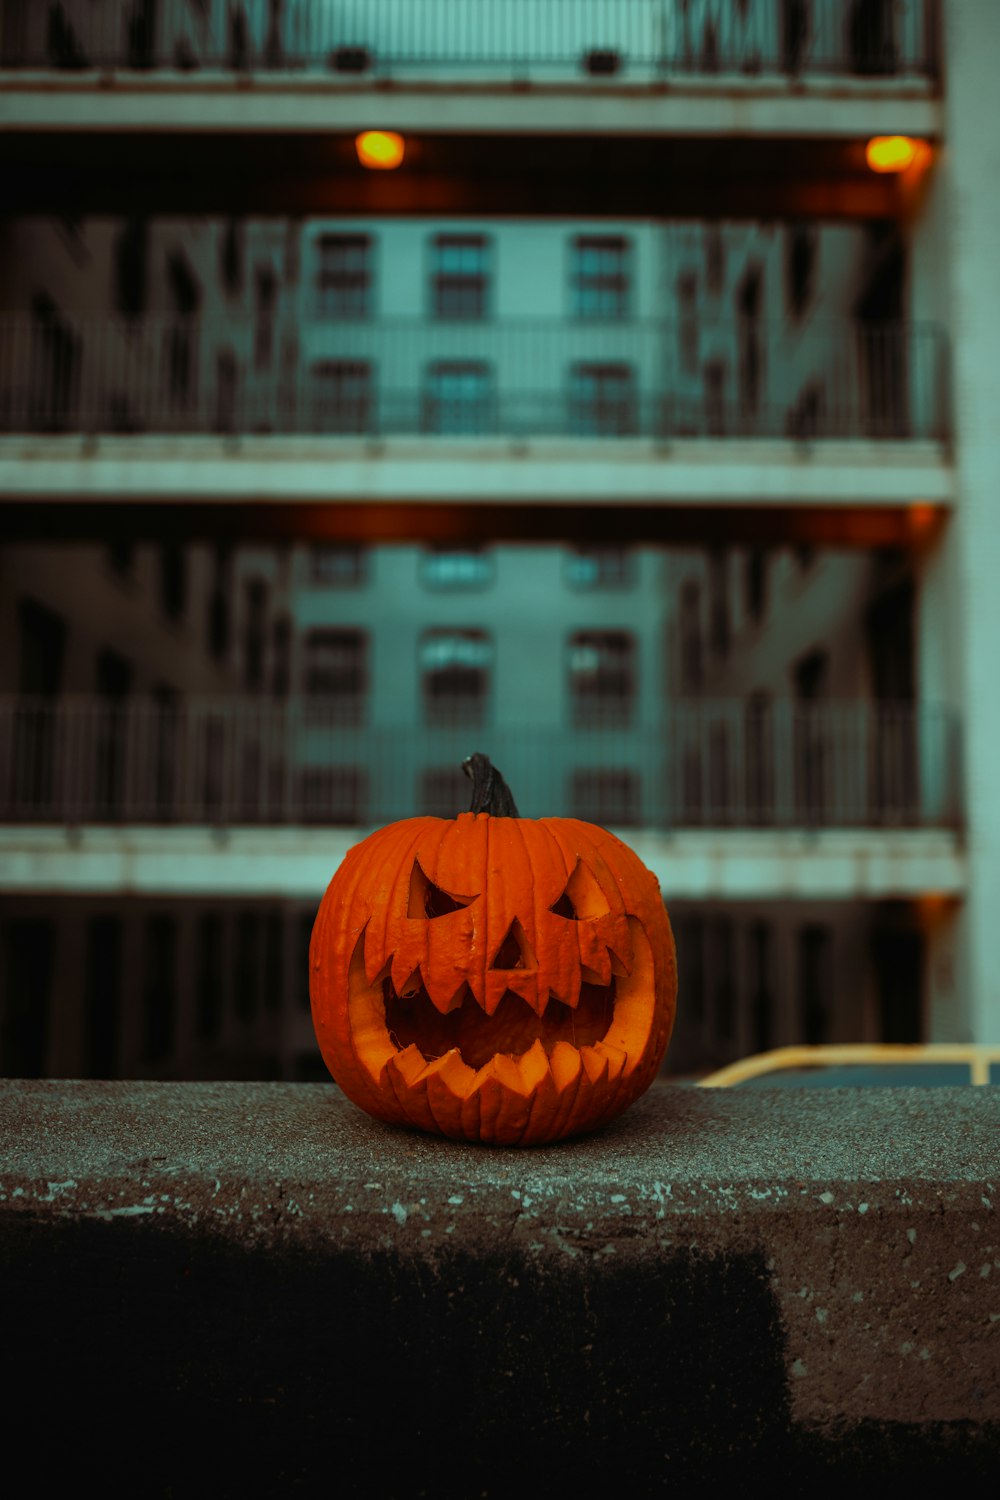 a pumpkin on a ledge